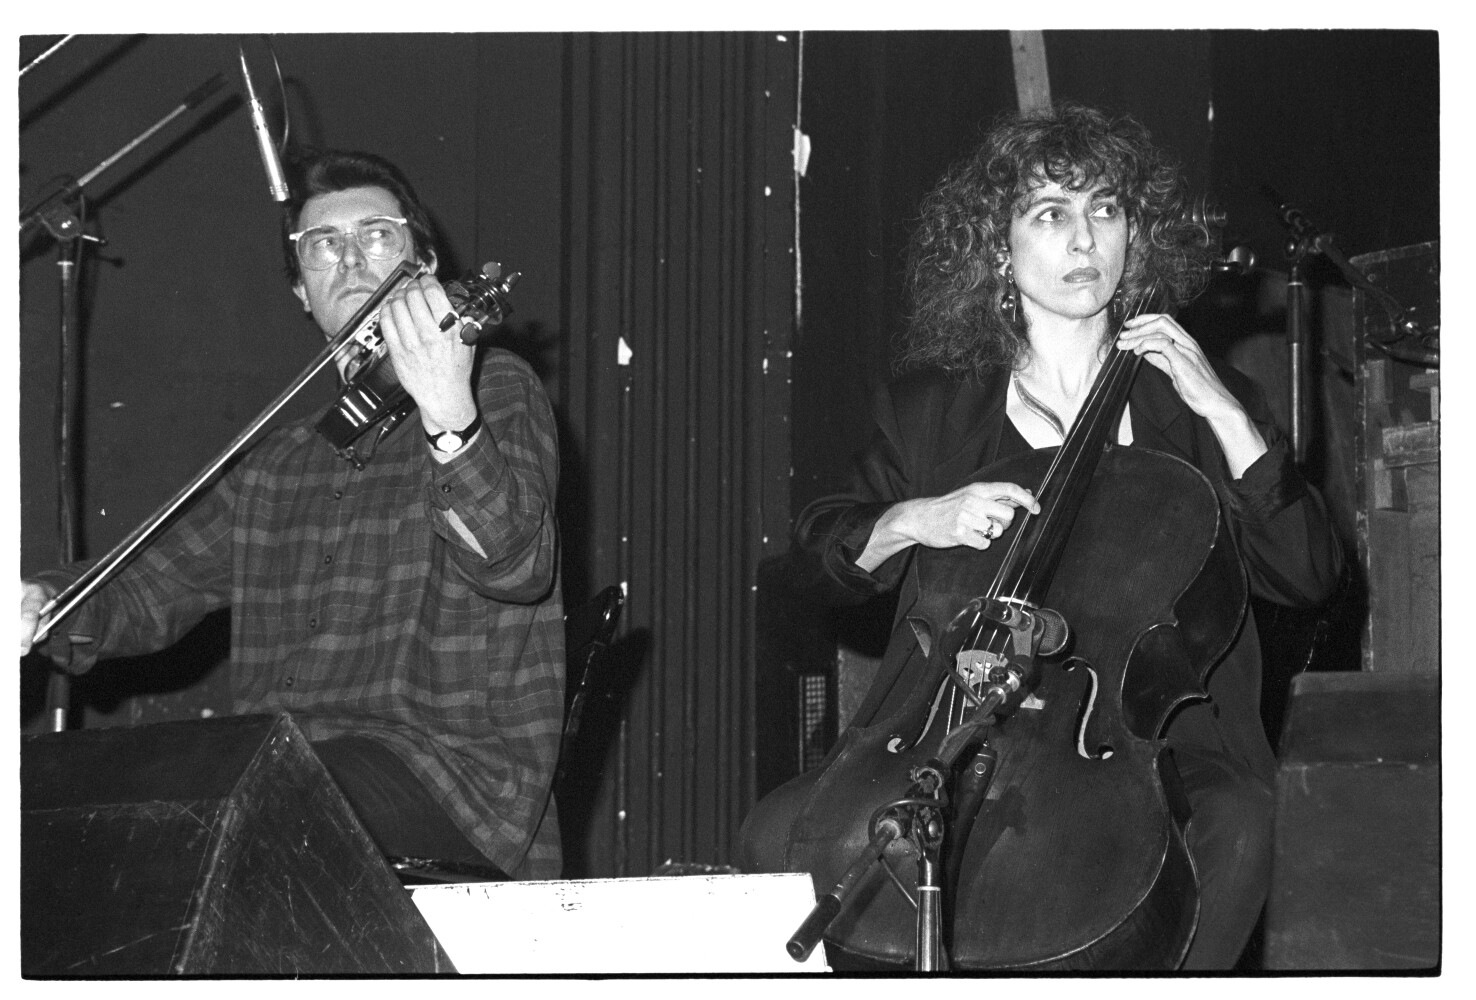 Penguin Cafe Orchestra 20.1.1988 I N2 (Rita Maier / Schwules Museum Berlin RR-P)